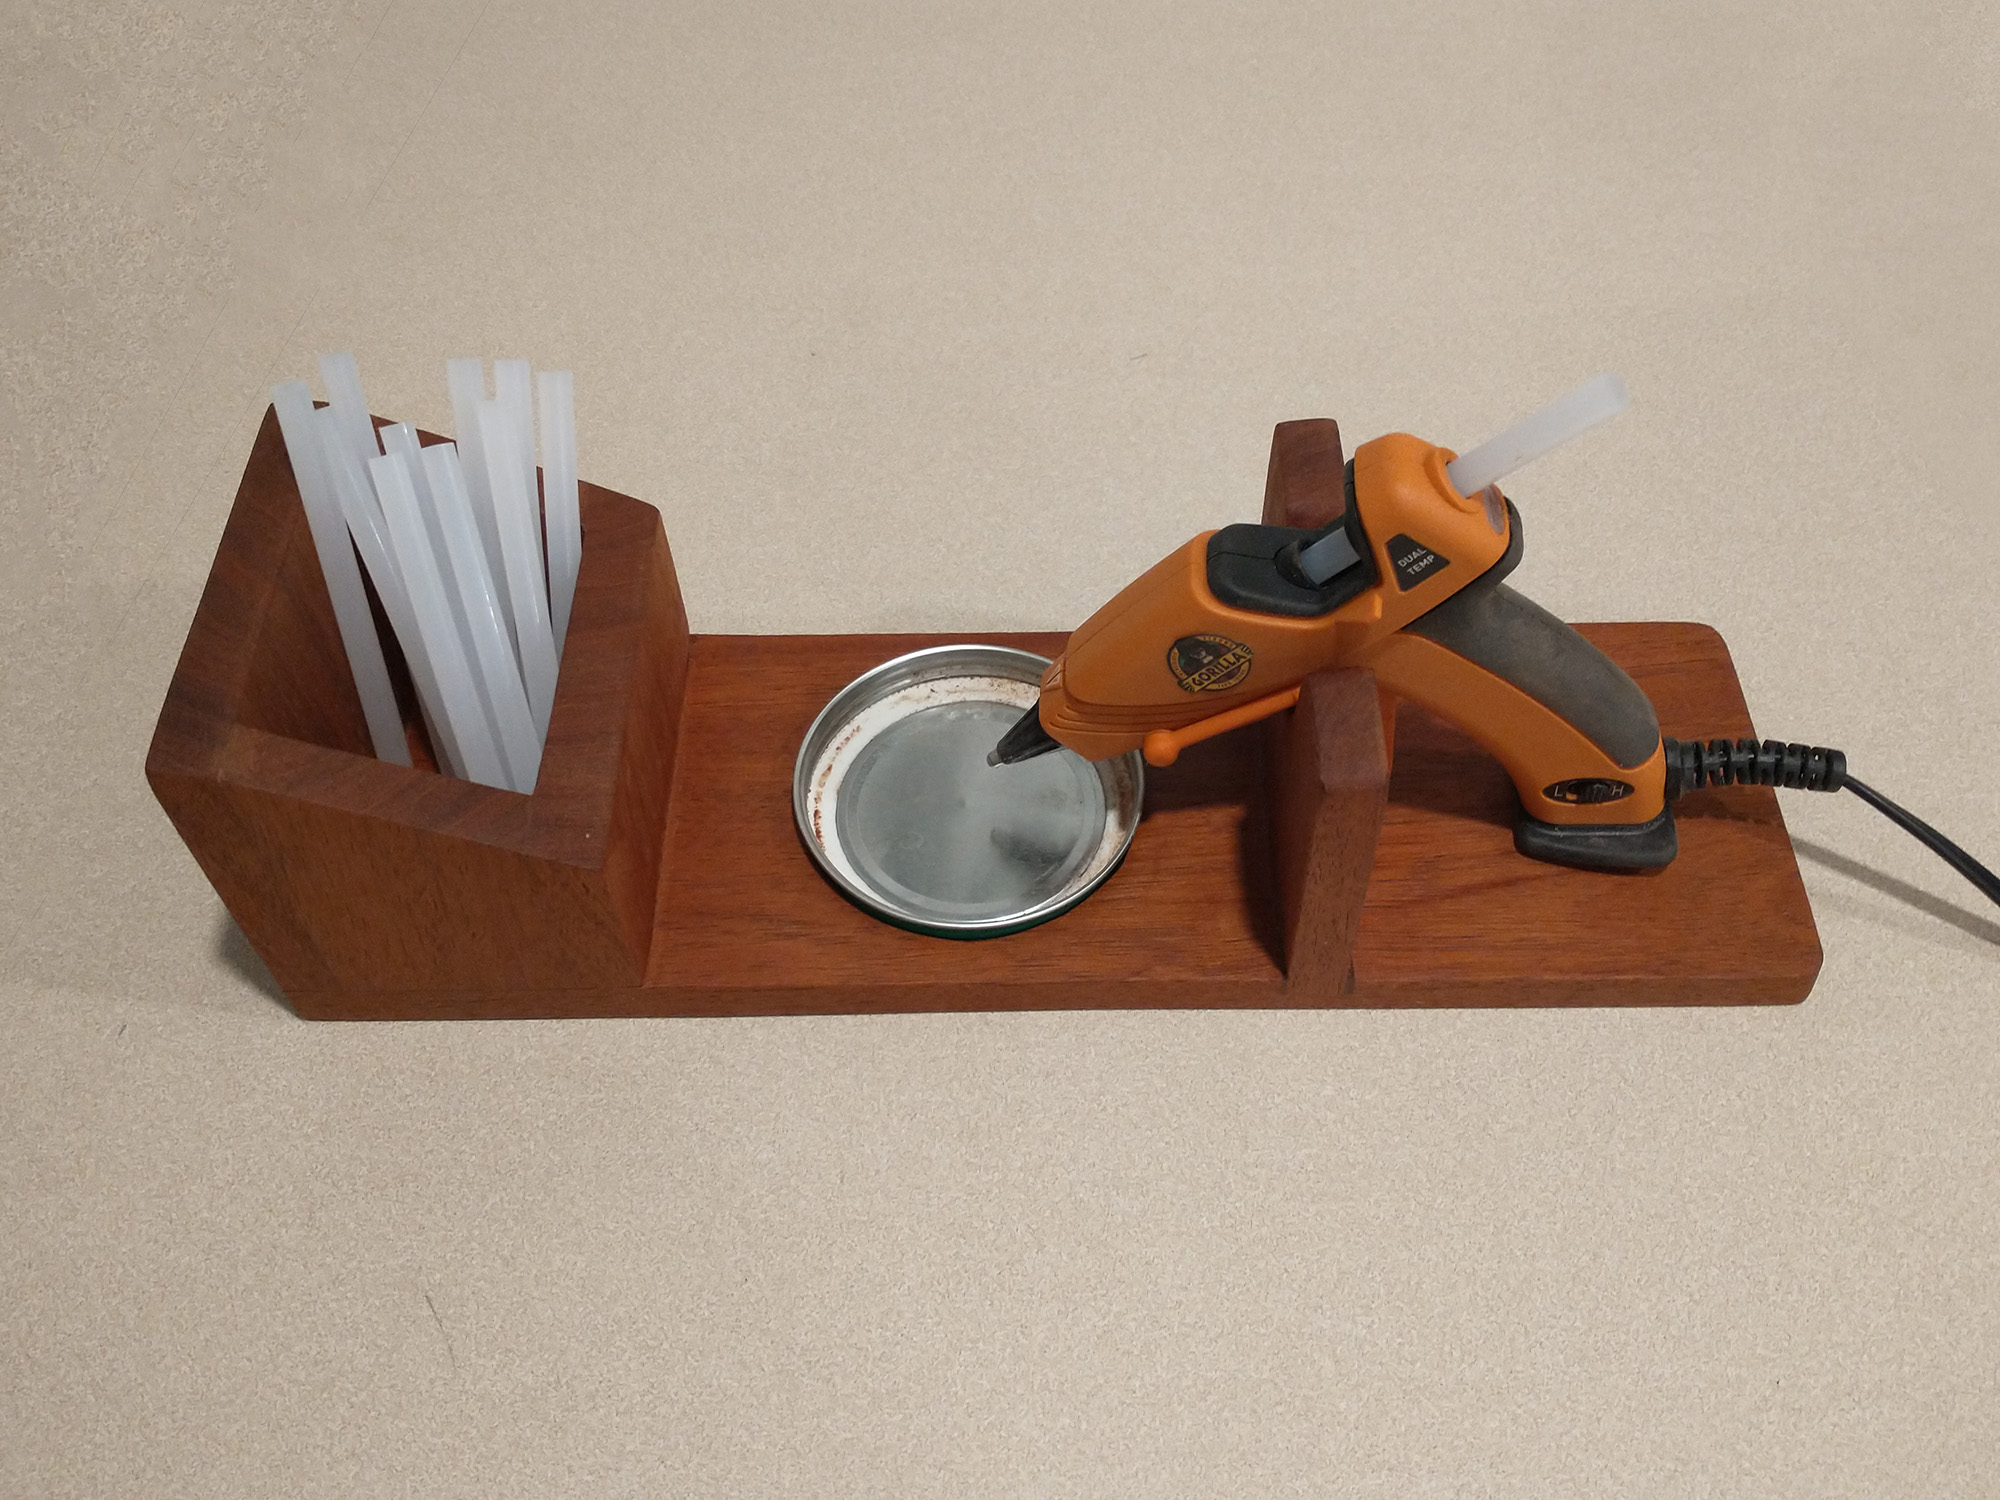 Build an easy hot glue gun stand that works